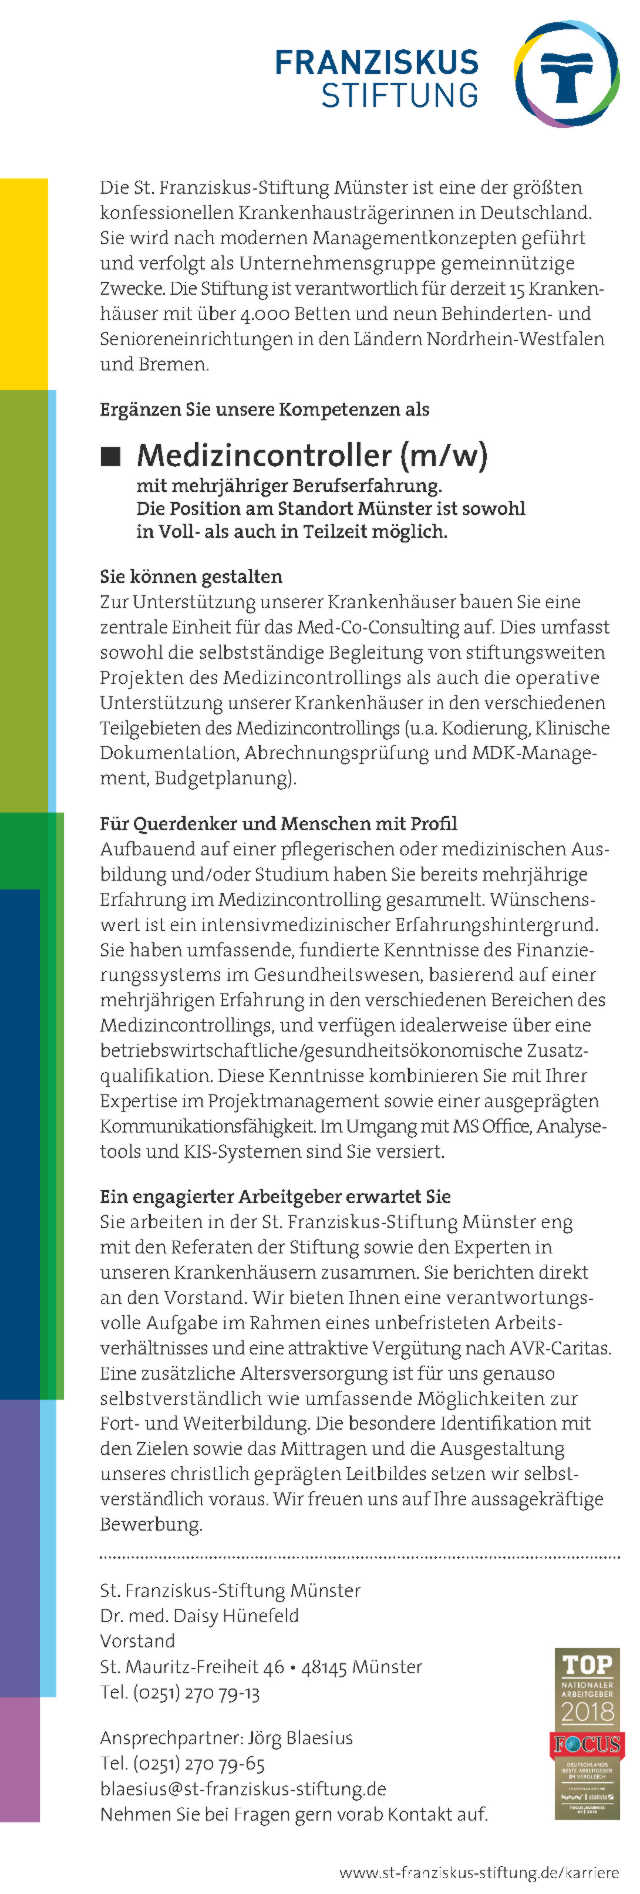 St. Franziskus-Stiftung Münster: Medizincontroller (m/w)